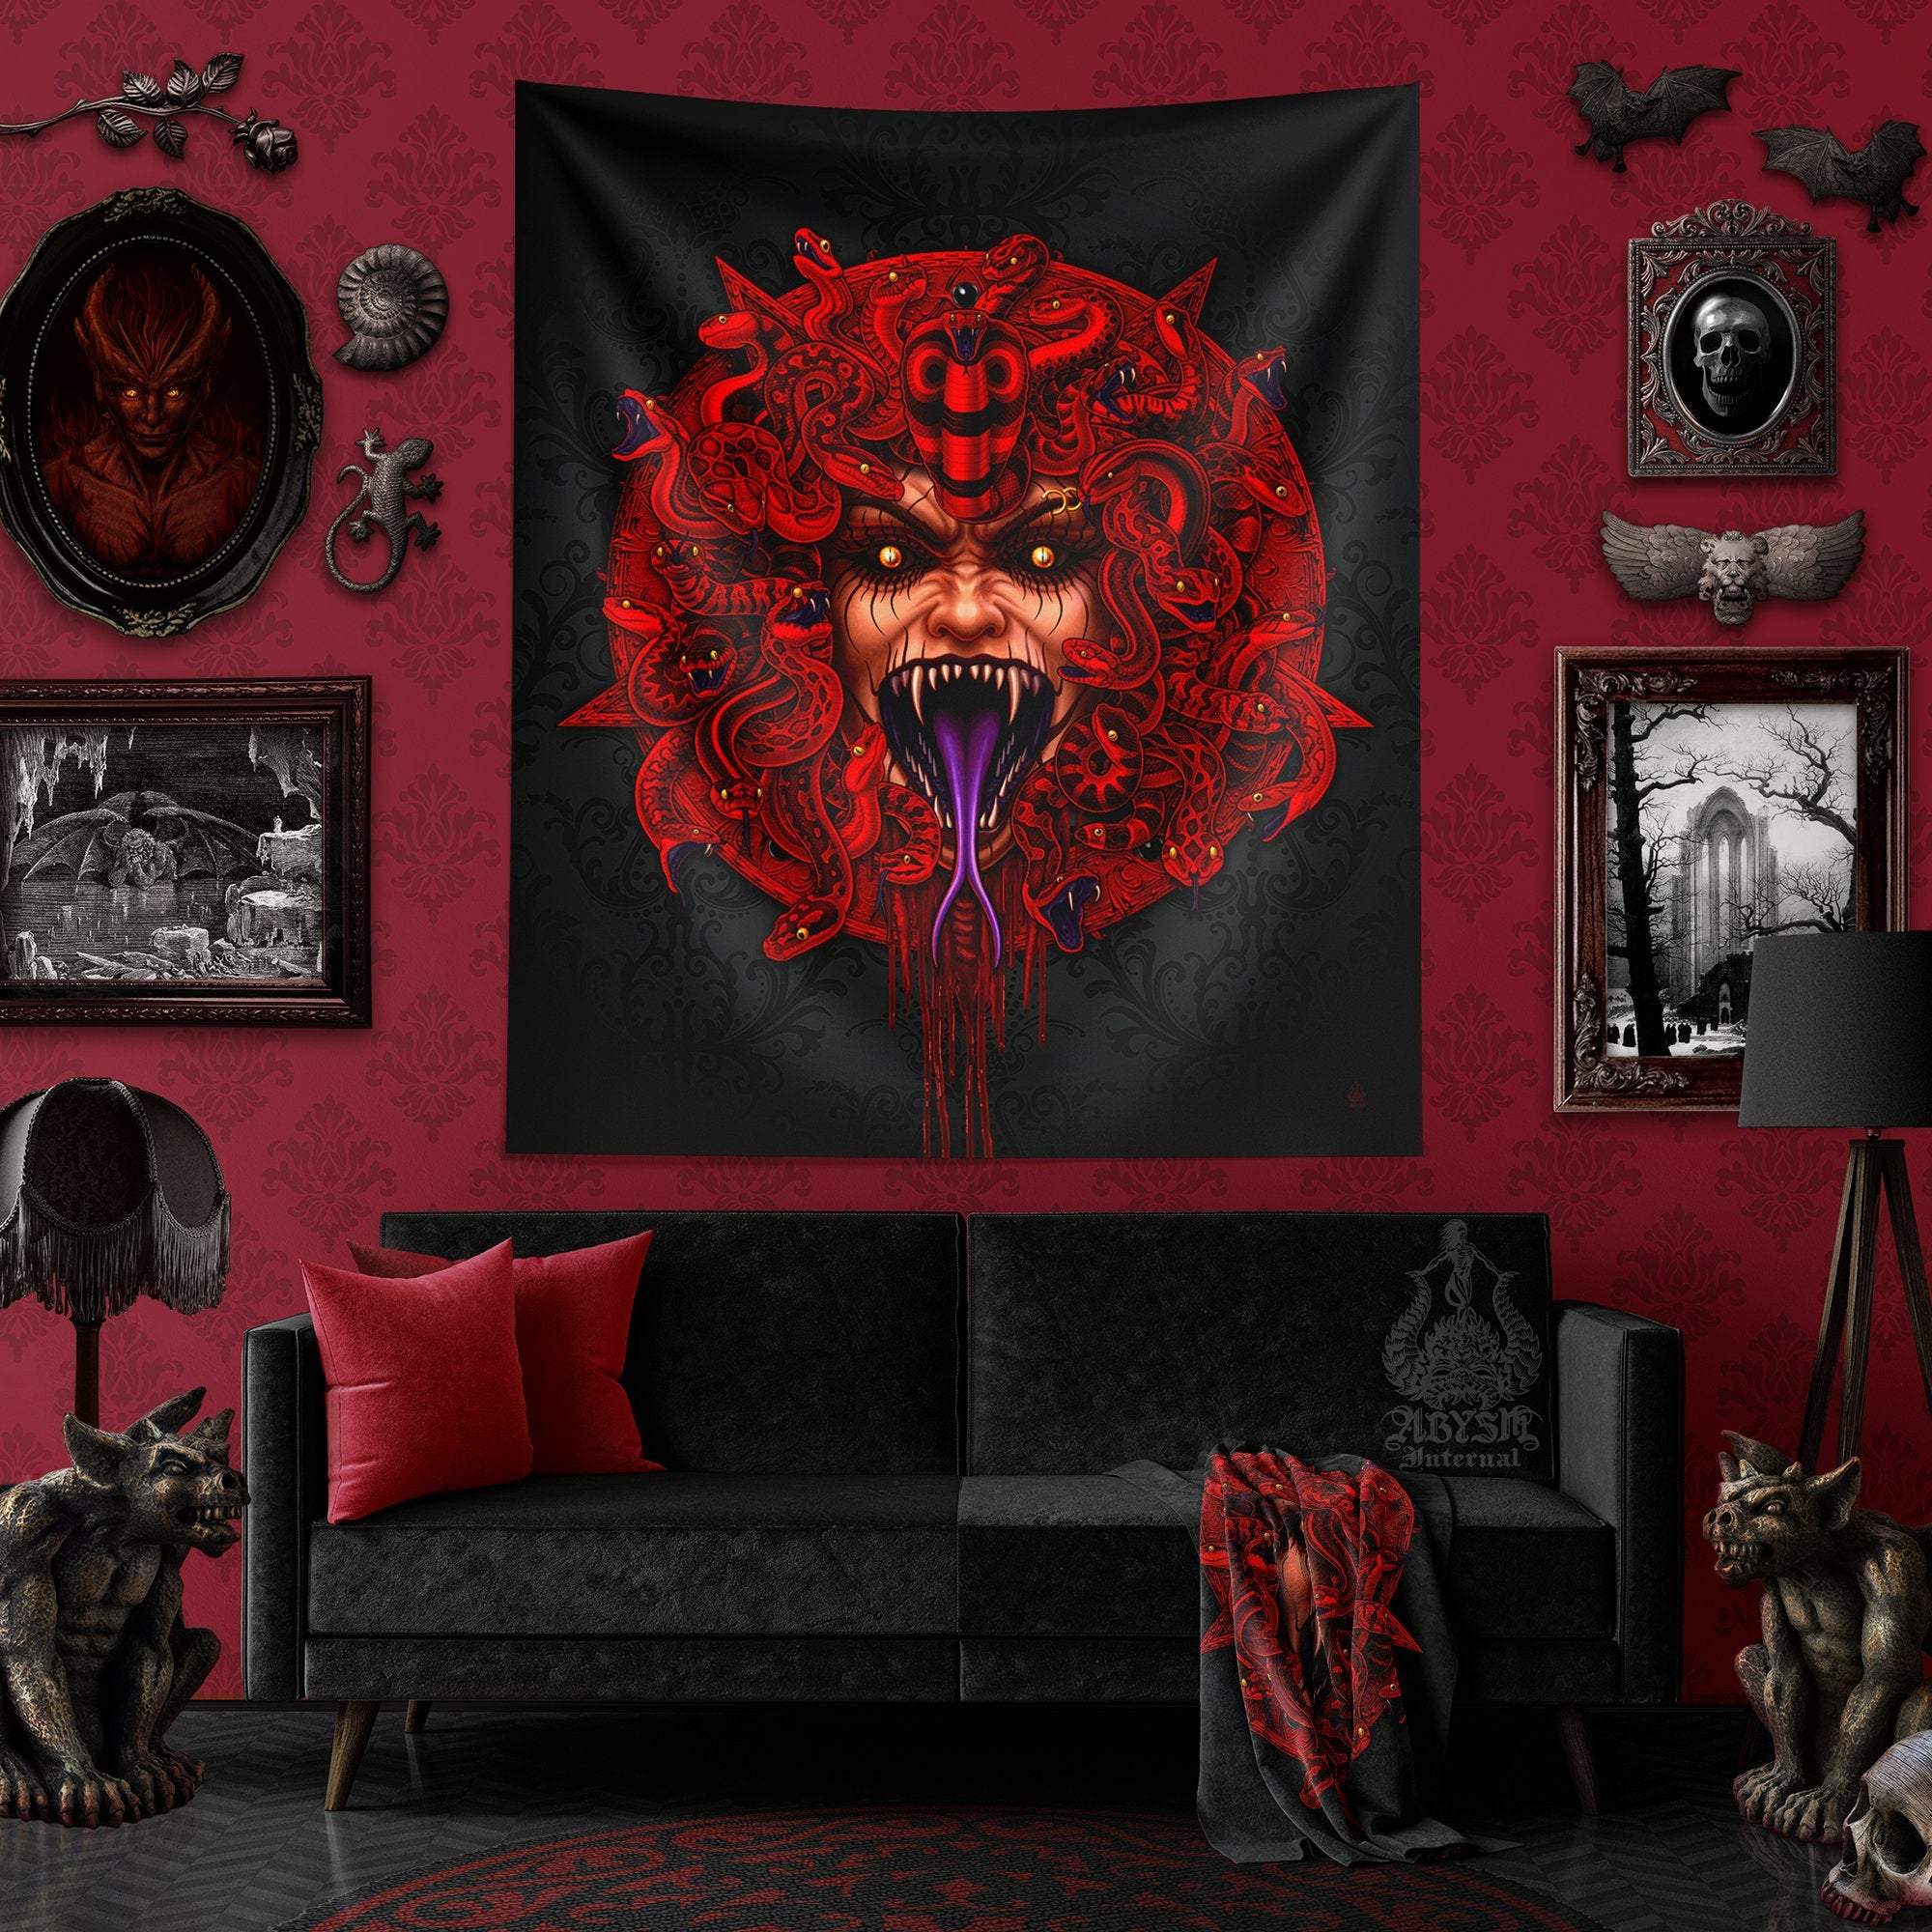 Tapestry, Red Pentagram Wall Hanging, Satanic Home Decor, Art Print - Red Medusa & Snakes, 2 Faces - Abysm Internal